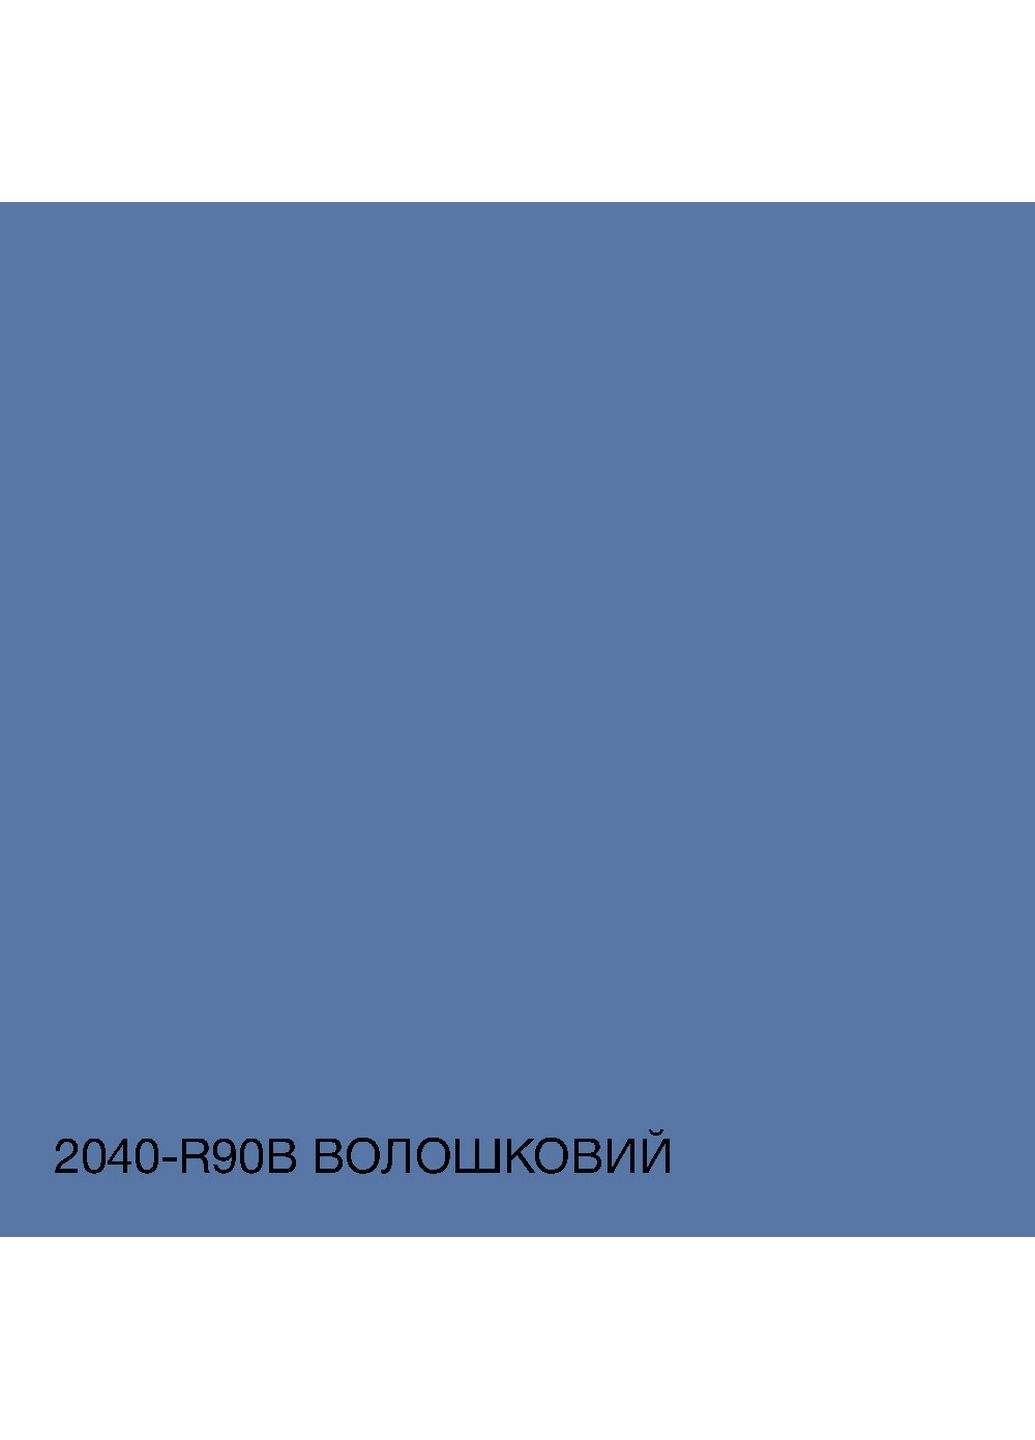 Інтер'єрна латексна фарба 2040-R90B 10 л SkyLine (289366638)